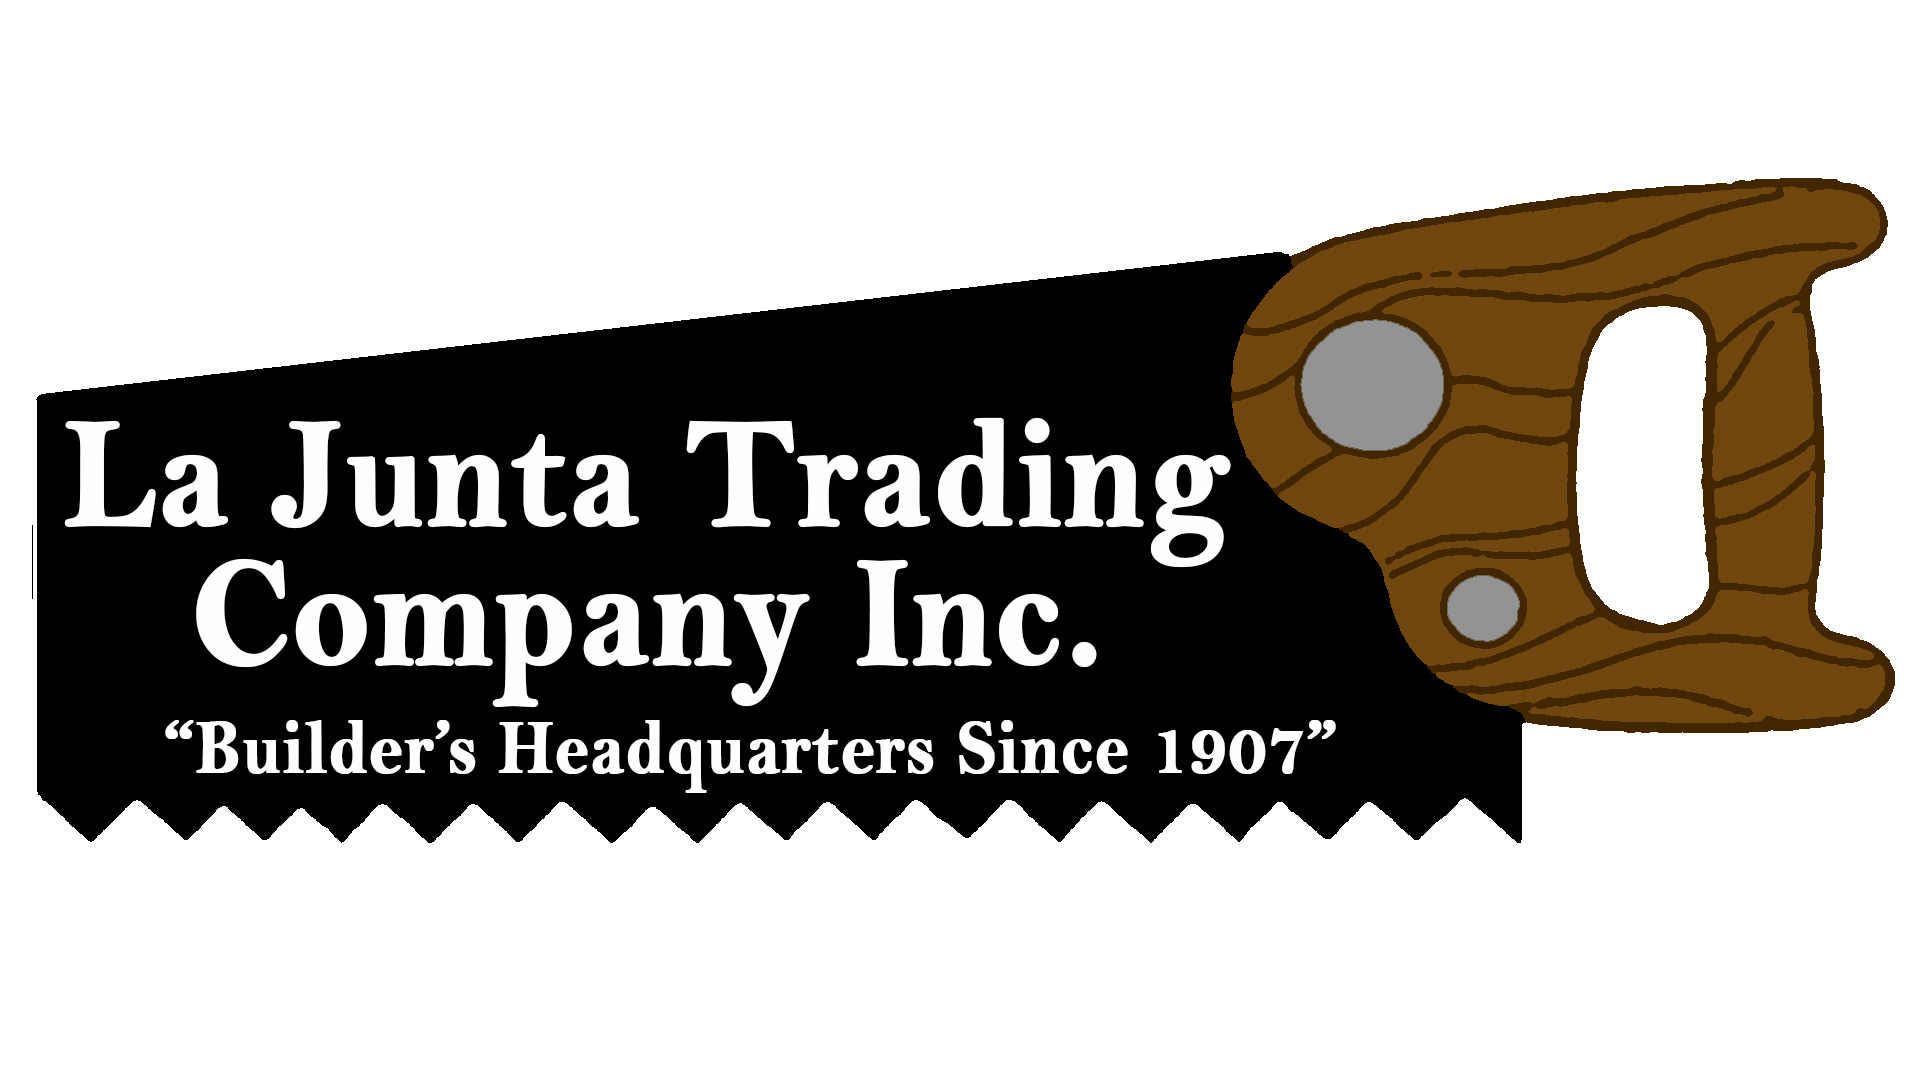 La Junta Trading Company SECO News seconews.org